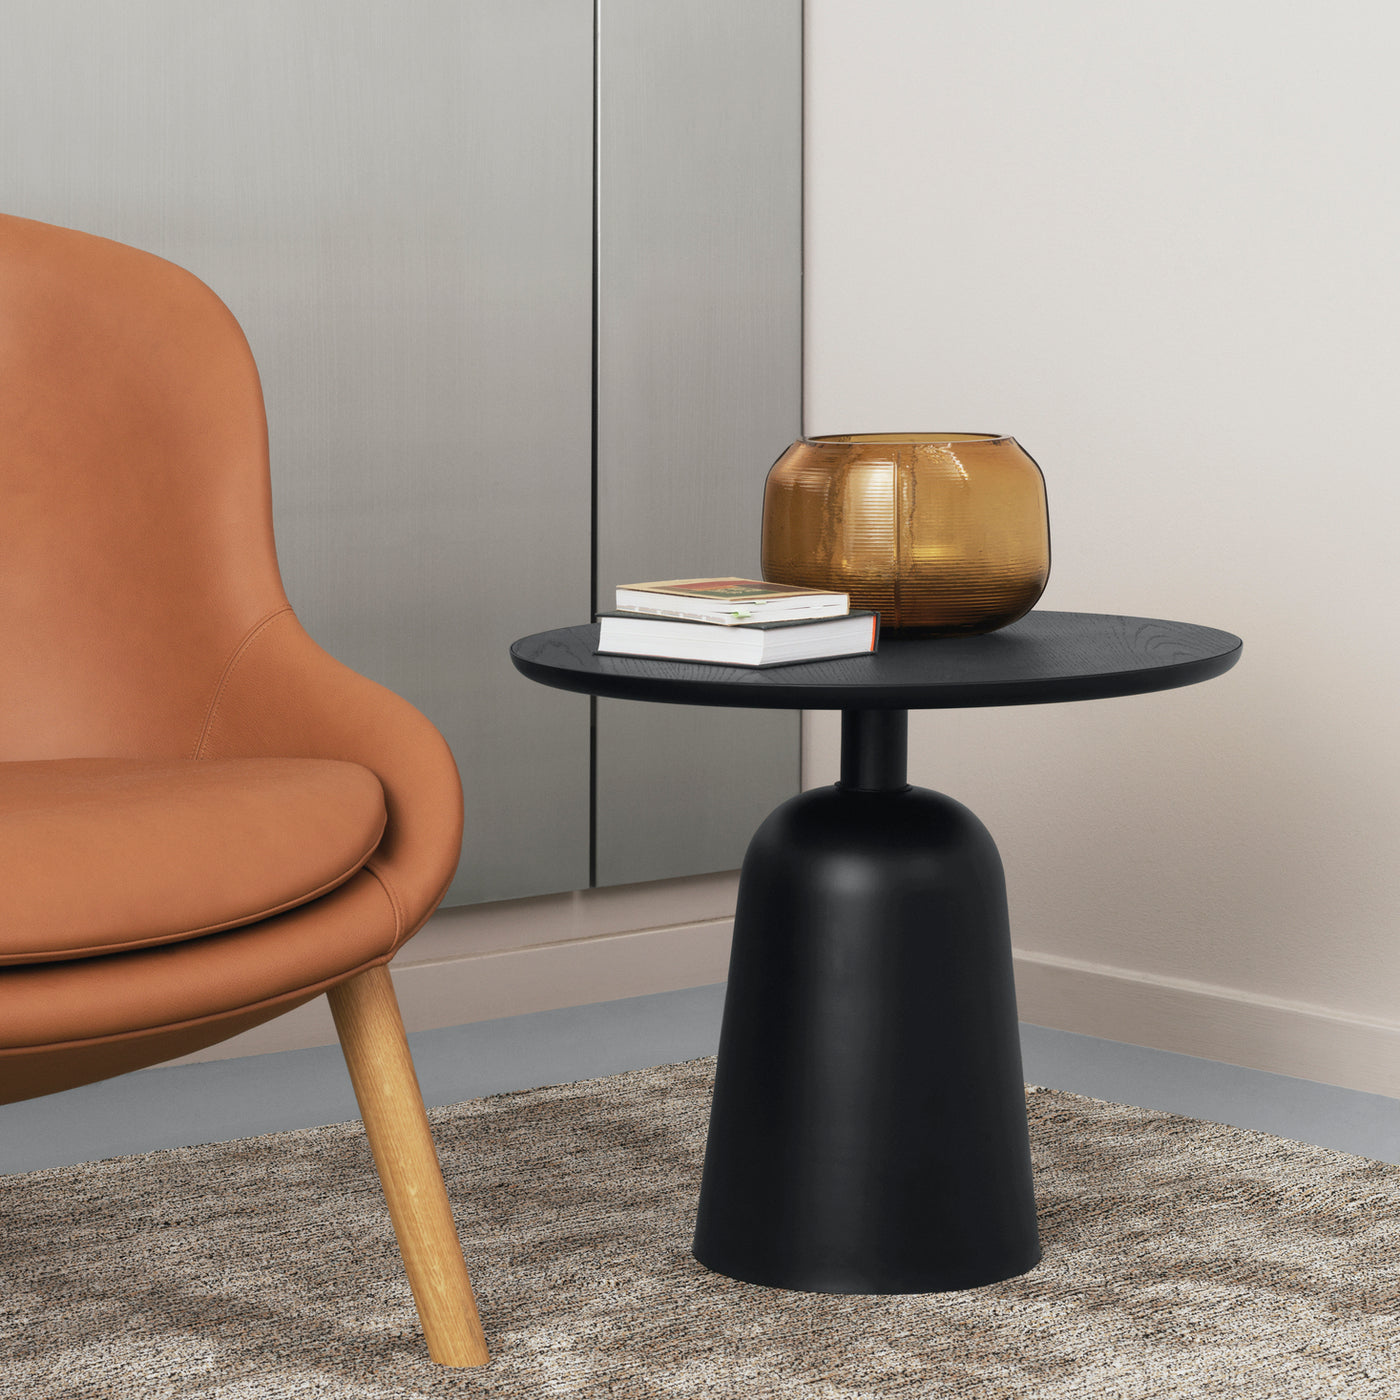 Normann Copenhagen Turn Table at someday designs. #colour_black